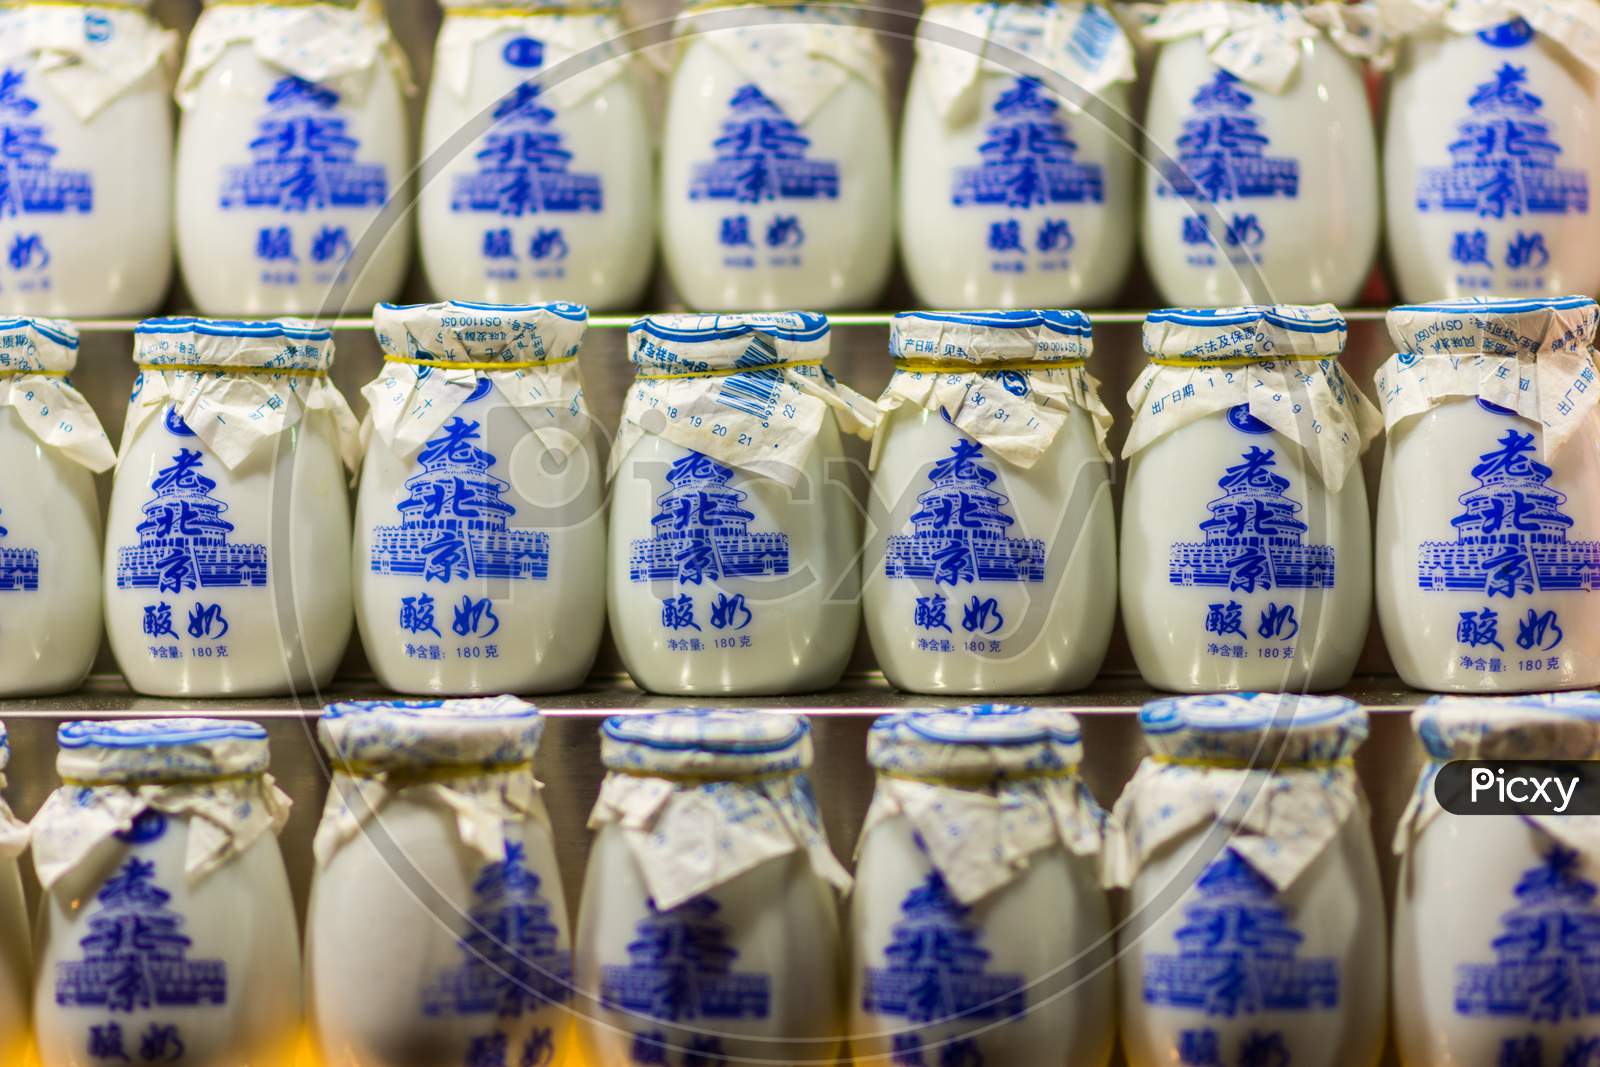 Cups Of Lao Beijing Suannai, Popular Old-Style Beijing Yogurt